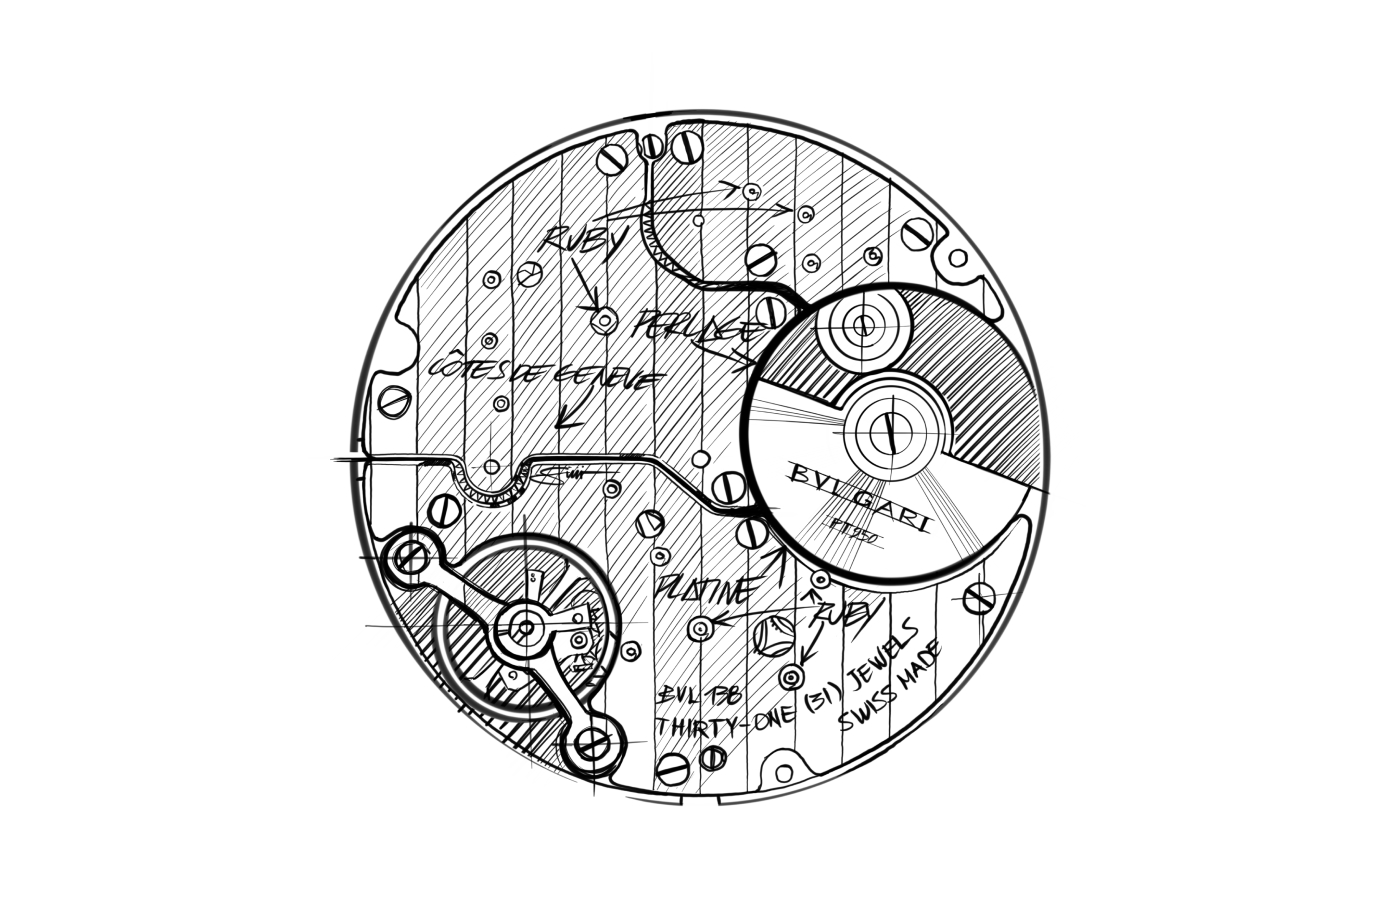 Sketch drawn by Bulgari’s Product Creation Executive Director Fabrizio Buonamassa Stigliani depicting the interior workings of the Octo Finissimo Automatic Sketch watch